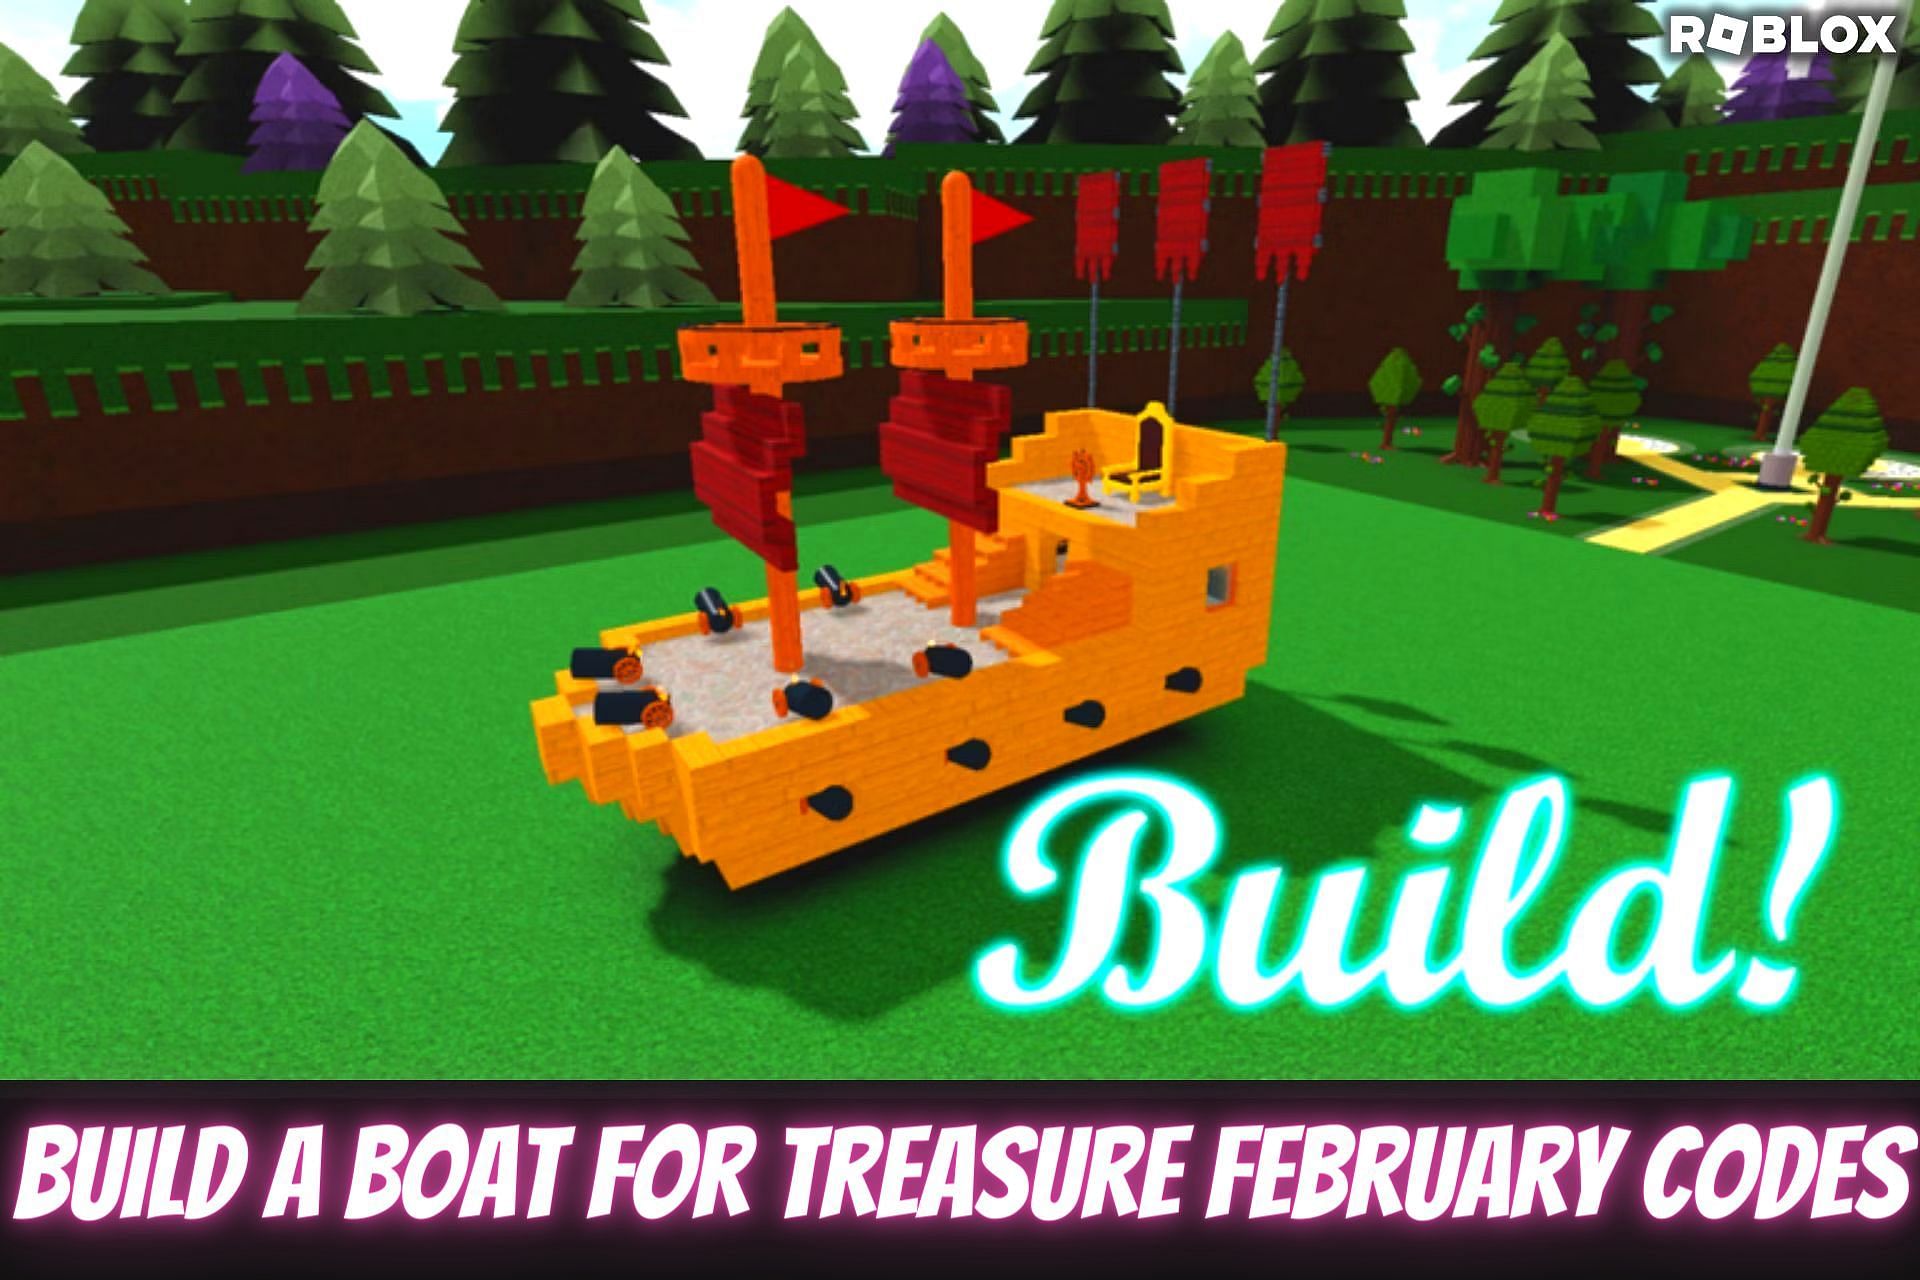 Build a Boat for Treasure February Codes